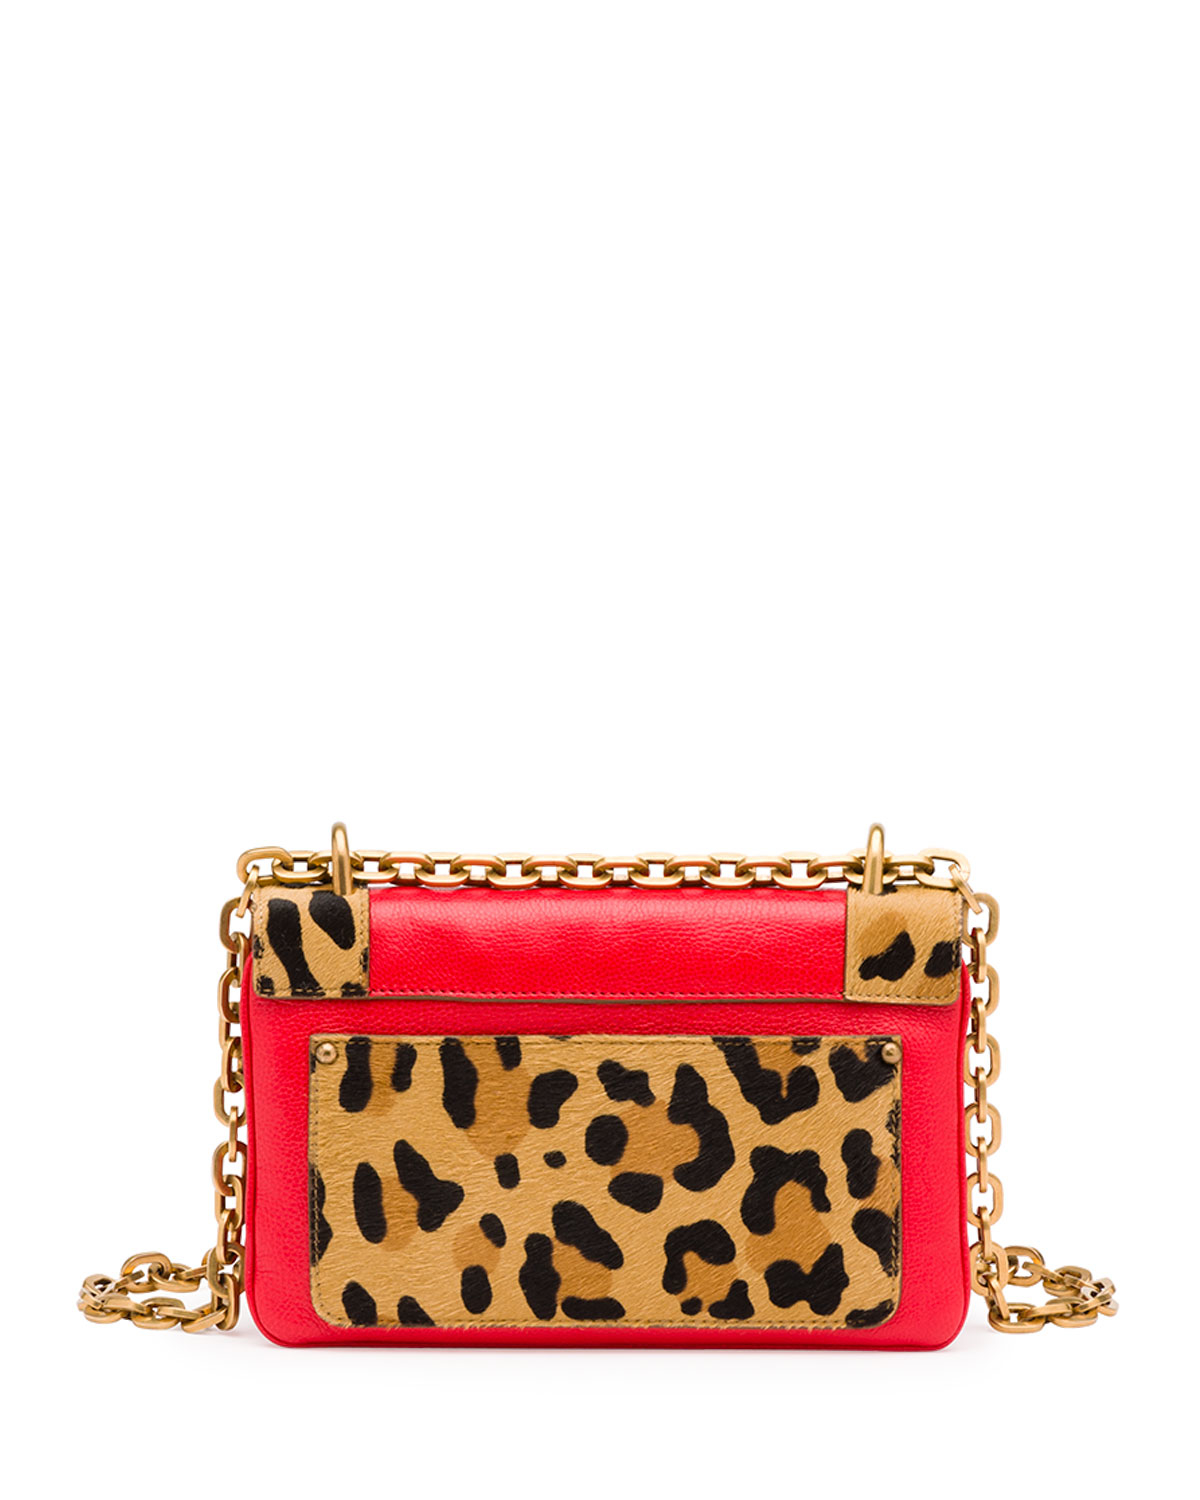 Prada Leopard-Print Chain Shoulder Bag in Red (LACCA + MIELE) | Lyst  